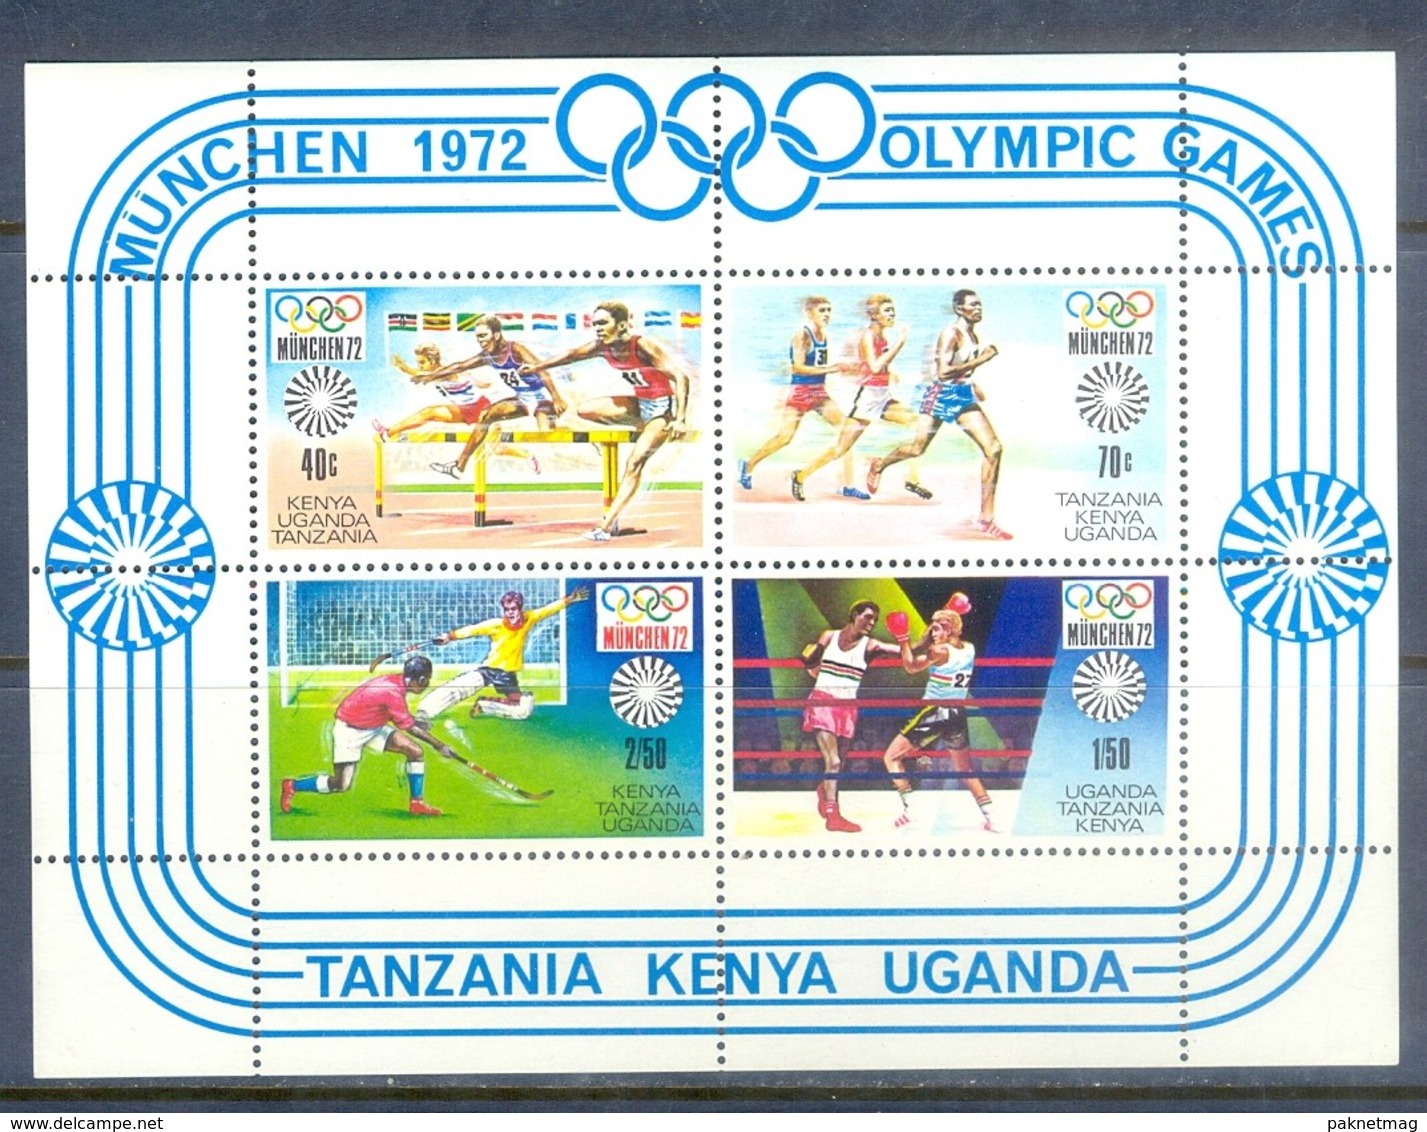 K163- Olympic Games 1972. Tanzania Kenya Uganda. Hockey. Boxing. Marathon Race. - Summer 1972: Munich